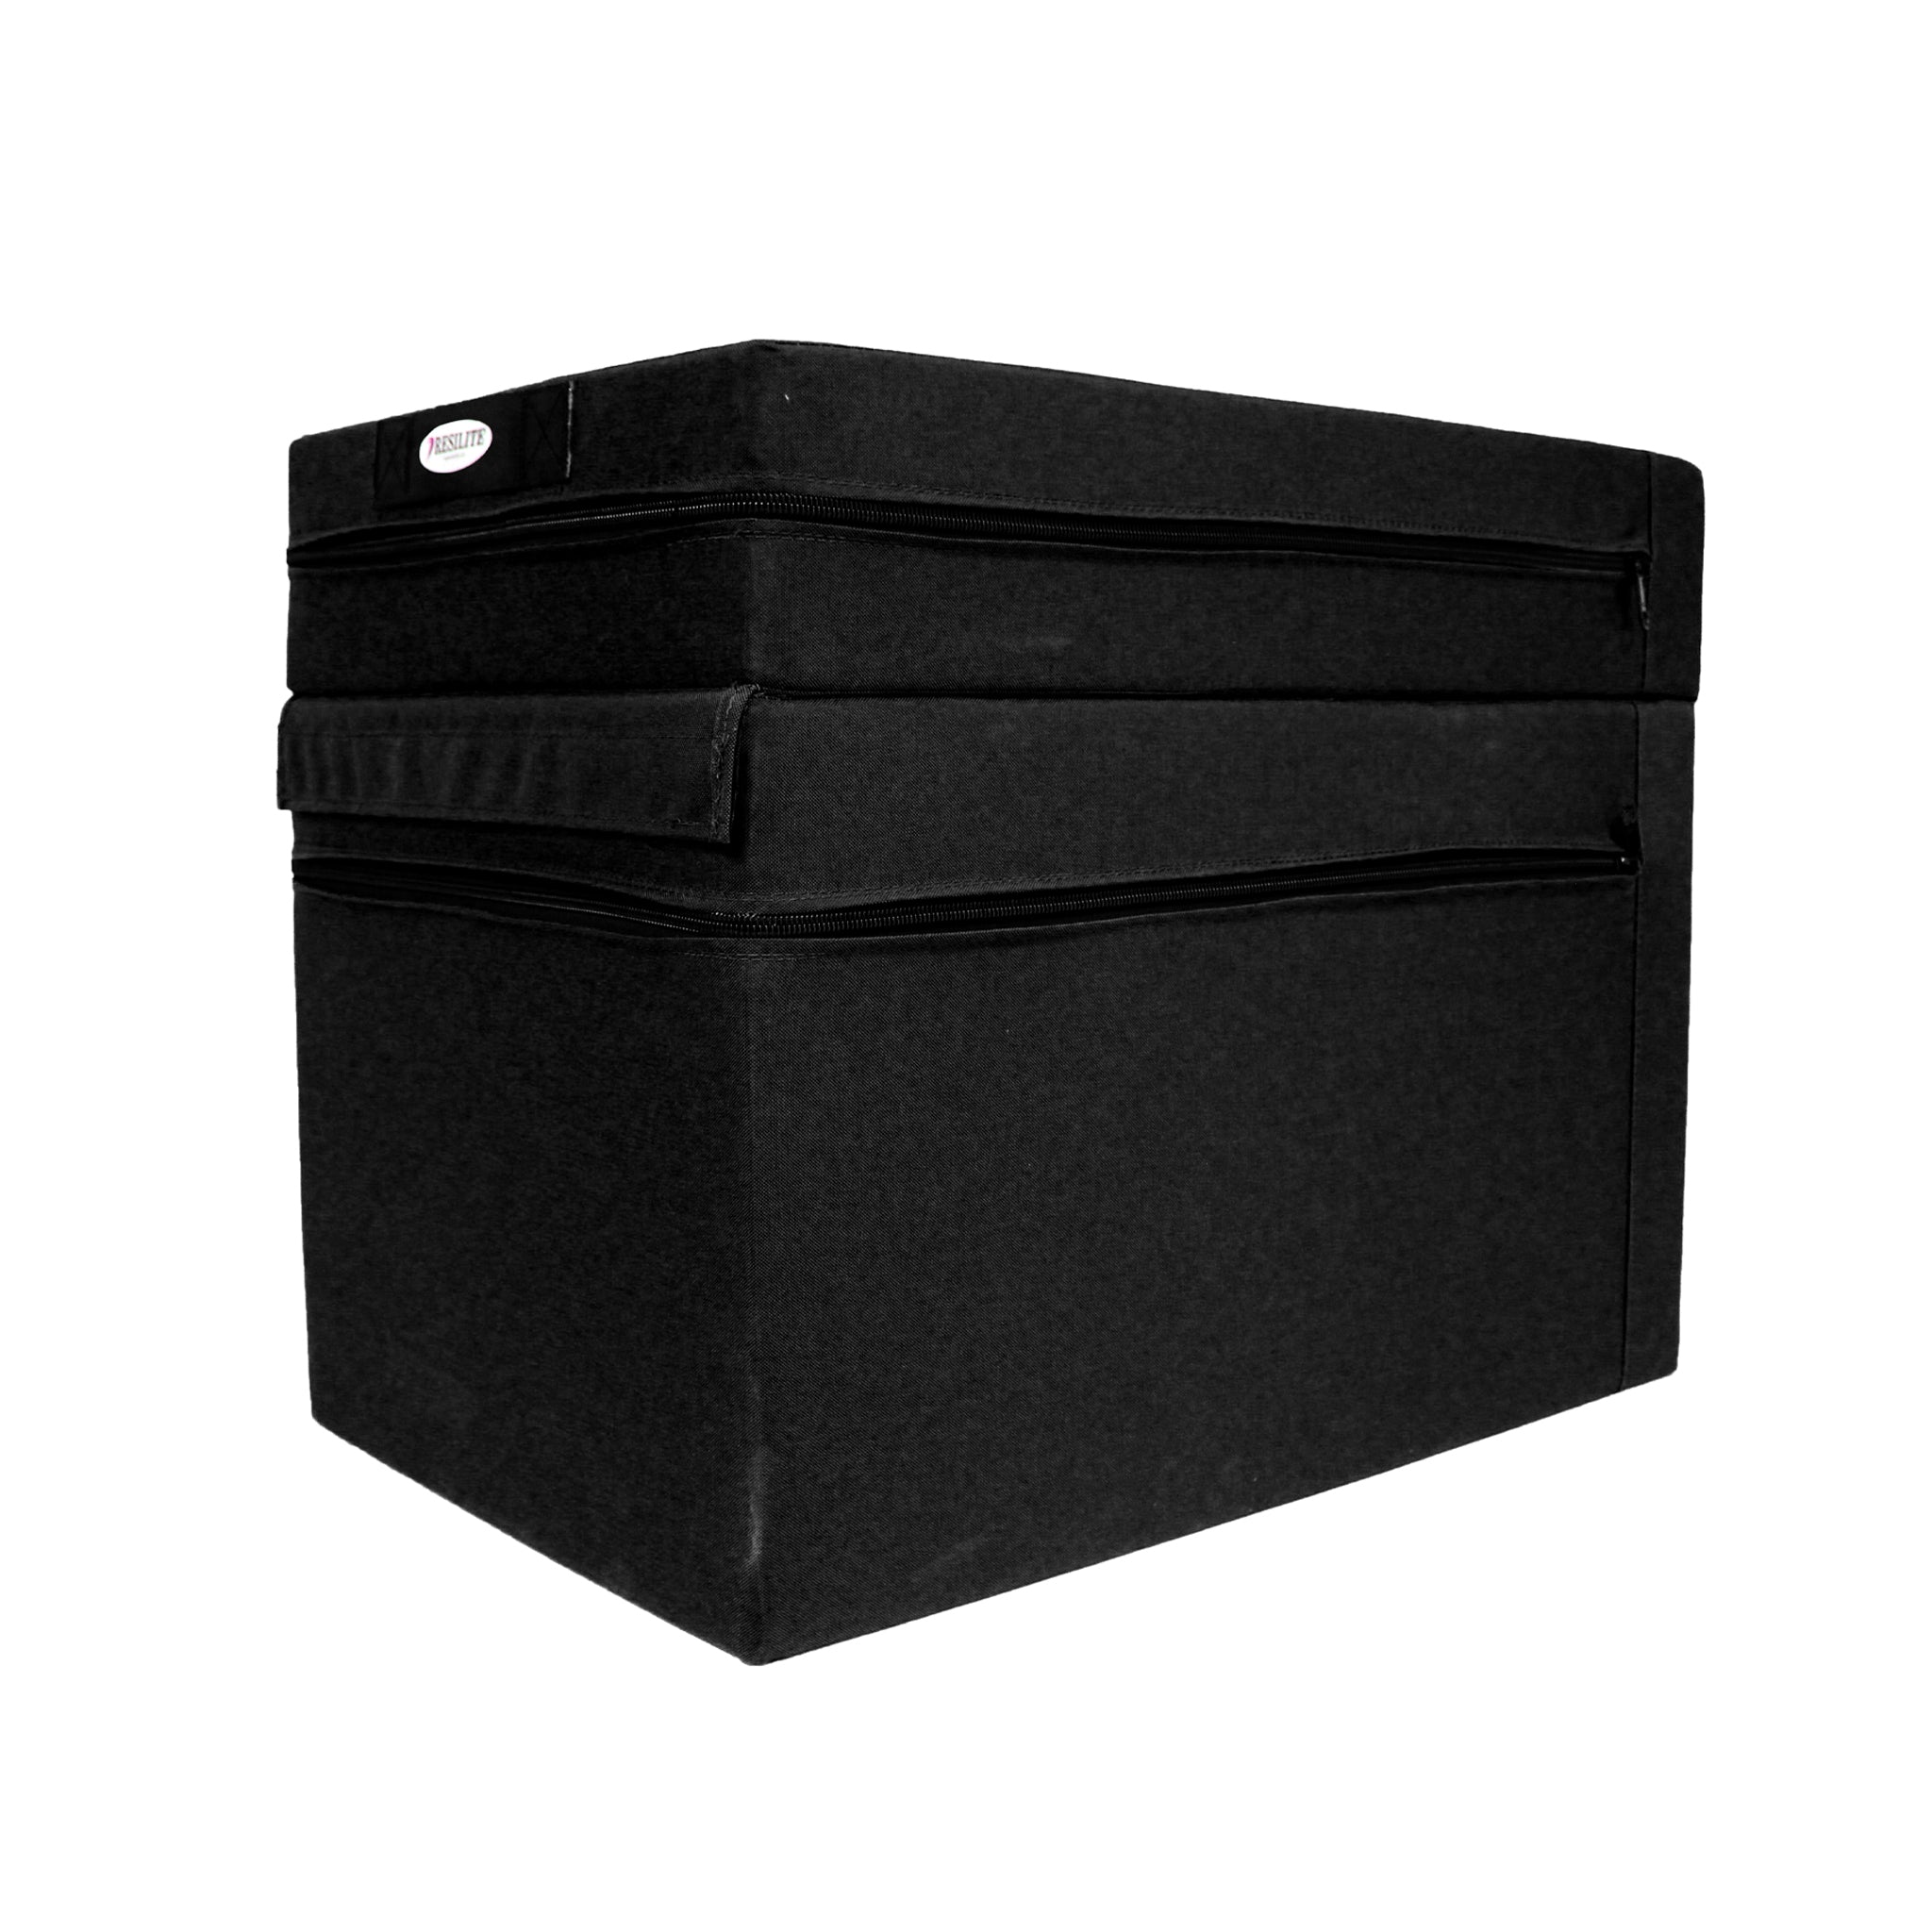 6-in-1 Plyo-Box (Black Fabric) - STCK-PLYB6IN1-BLACKF